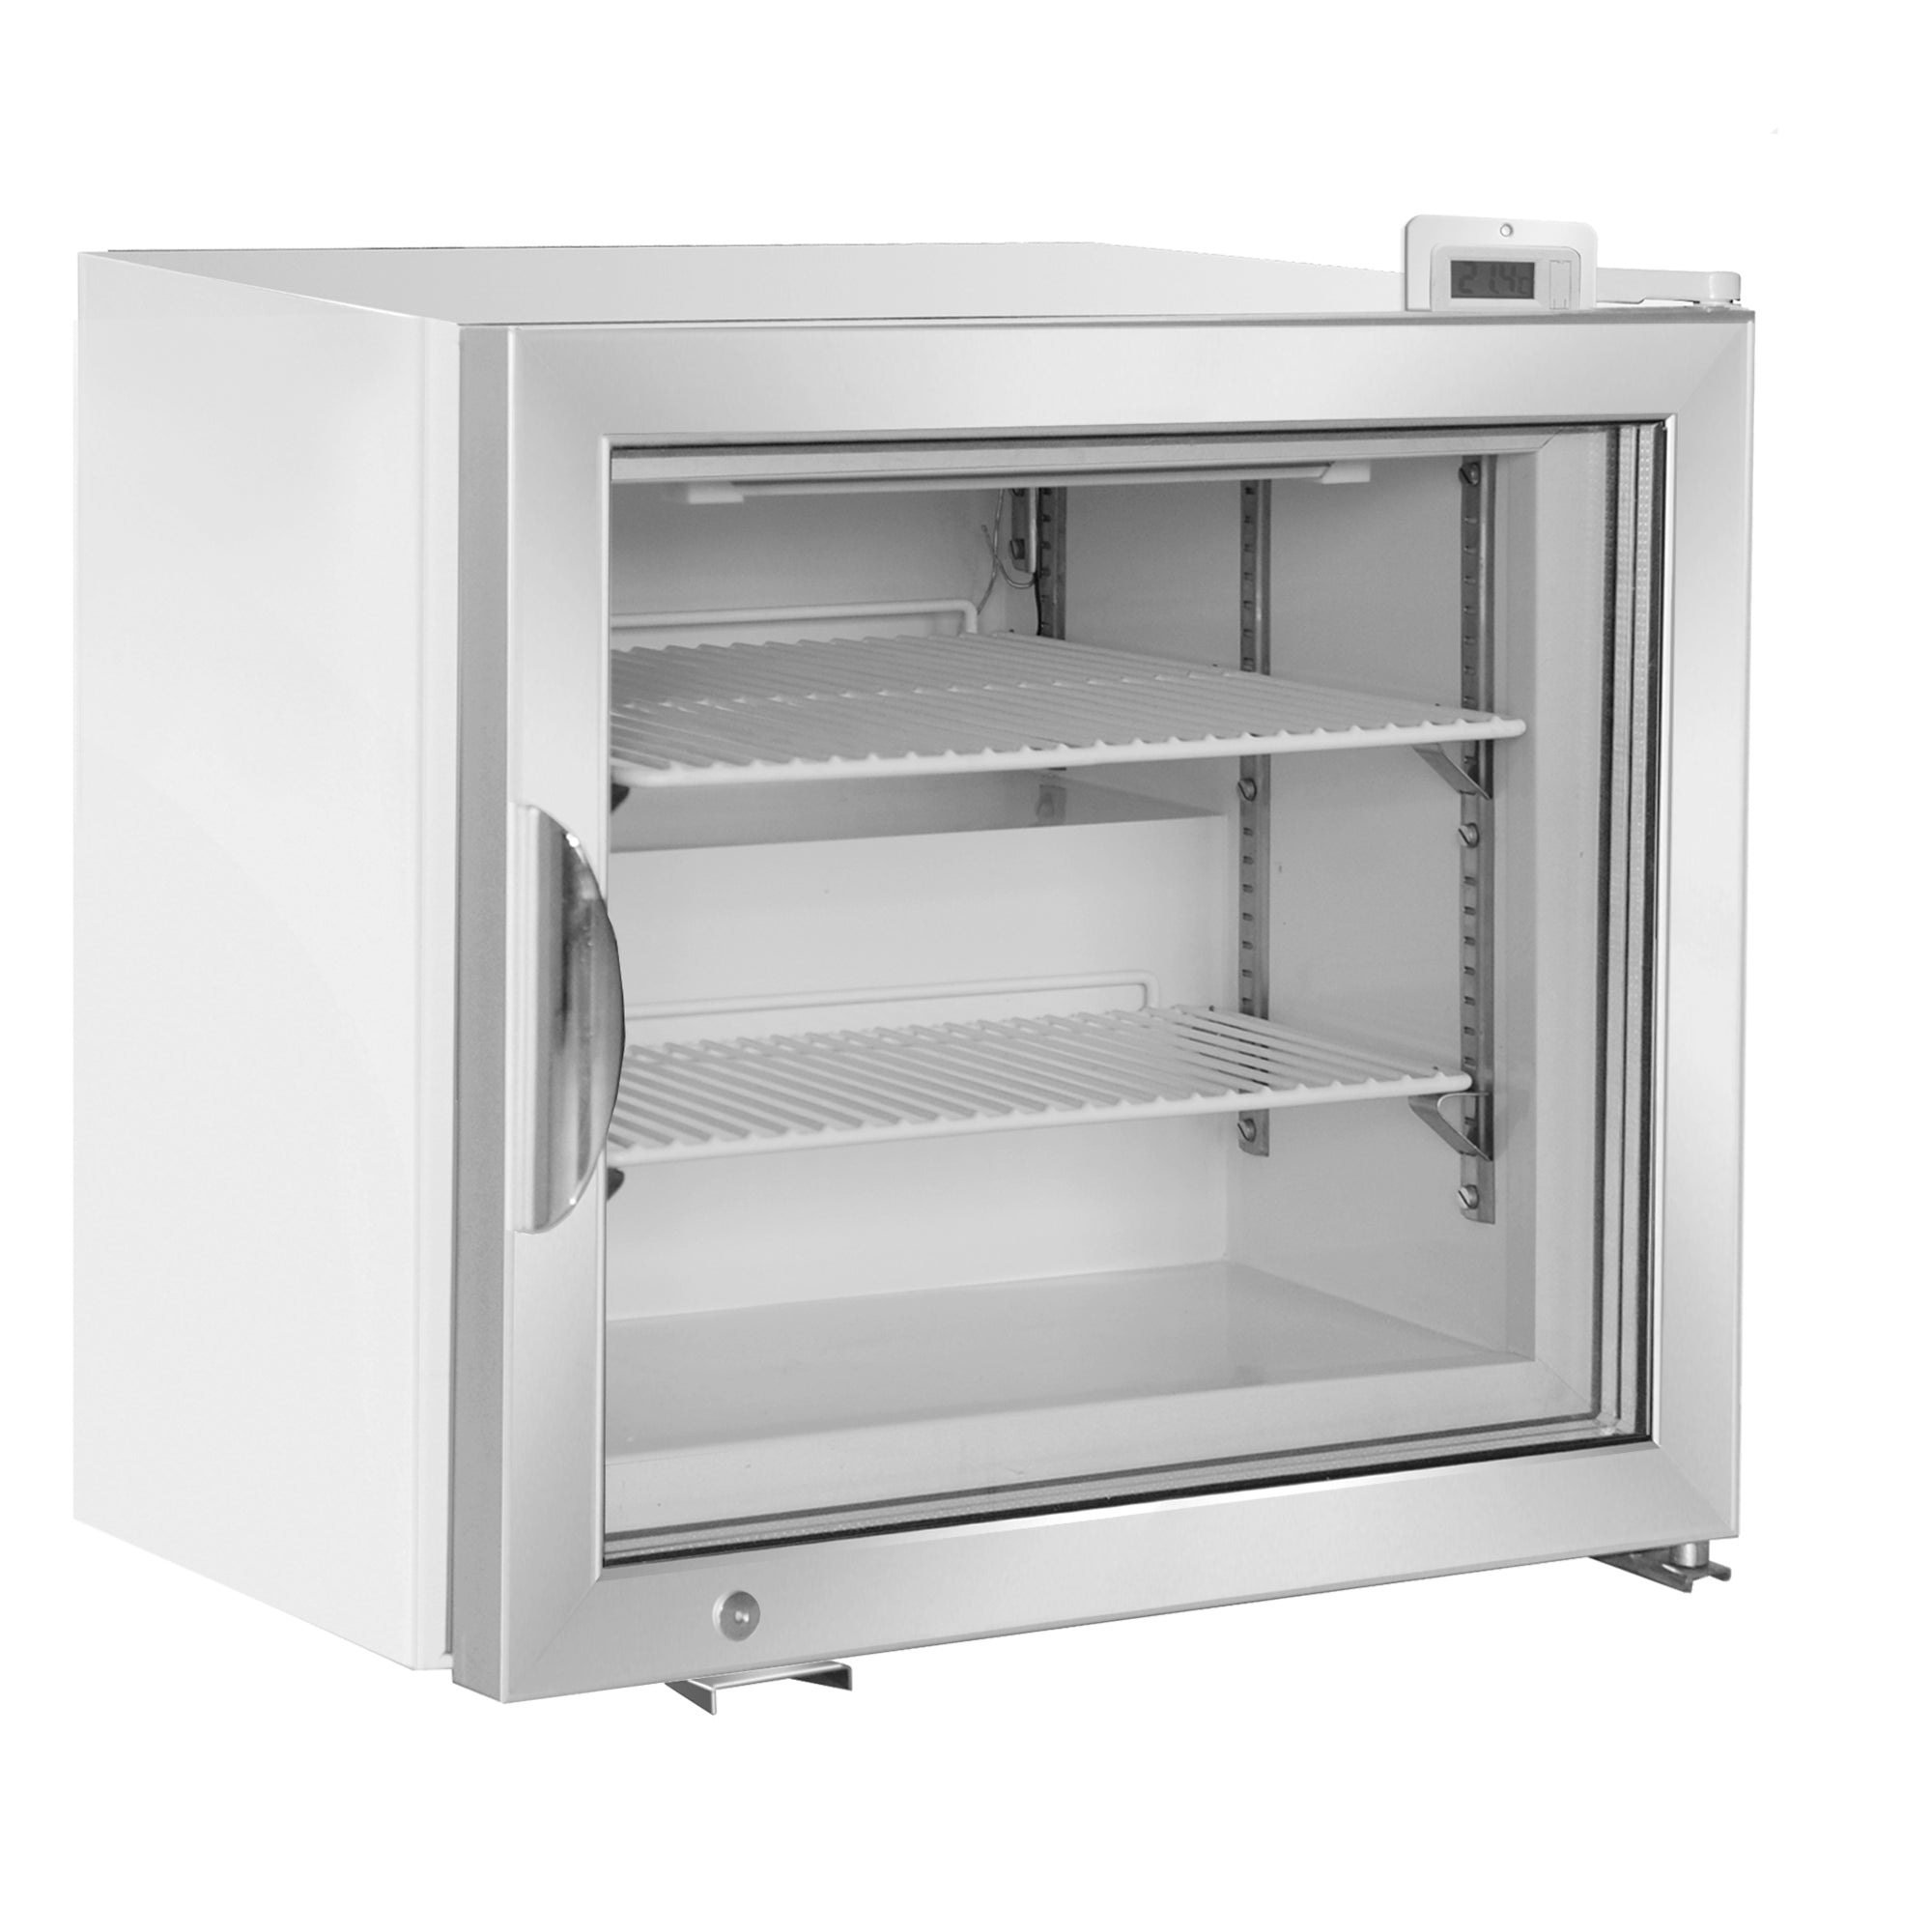 Maxx Cold - MXM1-2FHC, Maxx Cold Merchandiser Freezer, Countertop, 22.4"W,  2.1 cu. ft. Storage Capacity, in White